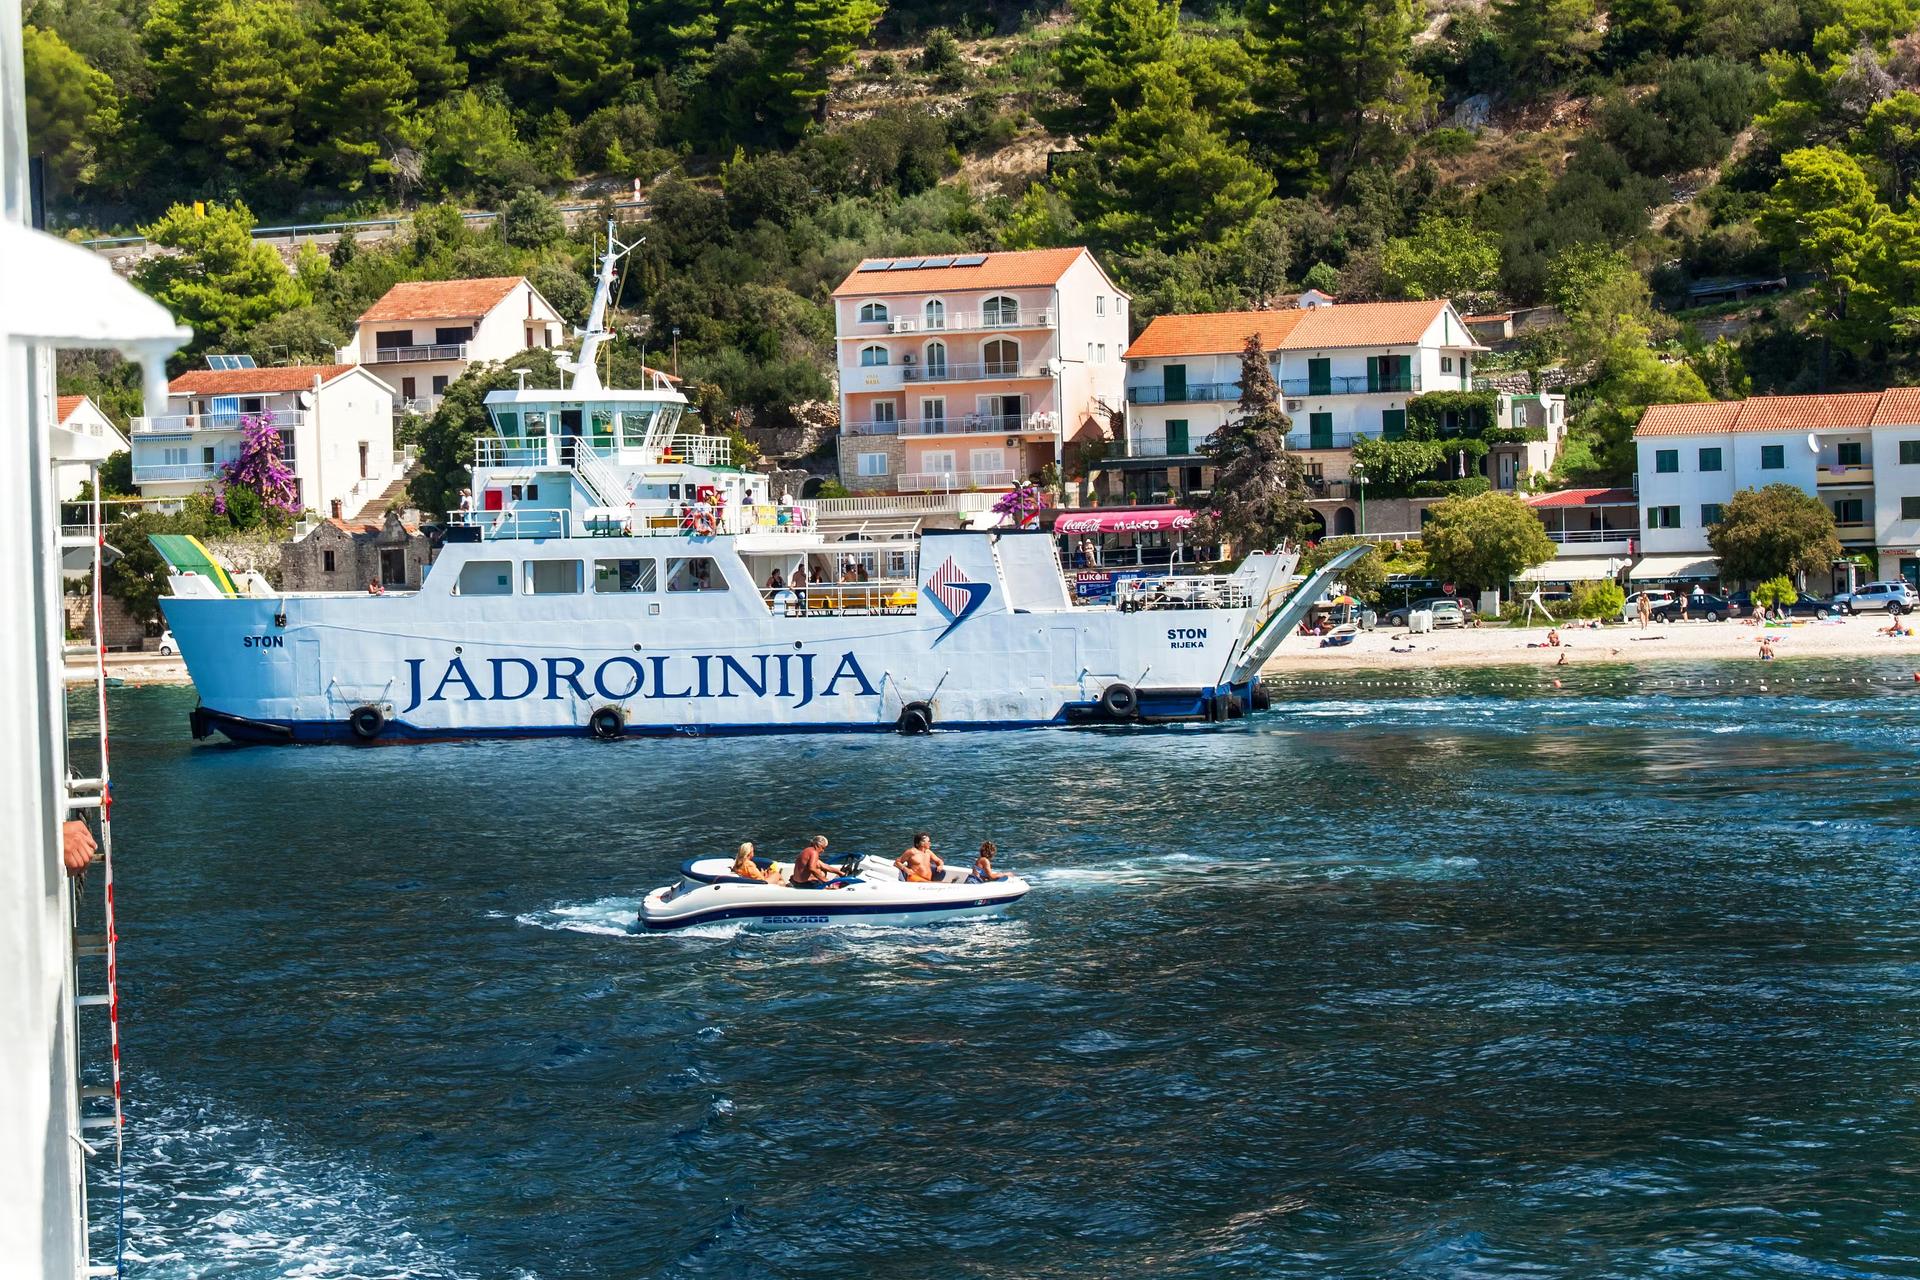 The Jadrolinija ferry entering Drvenik from Hvar Island